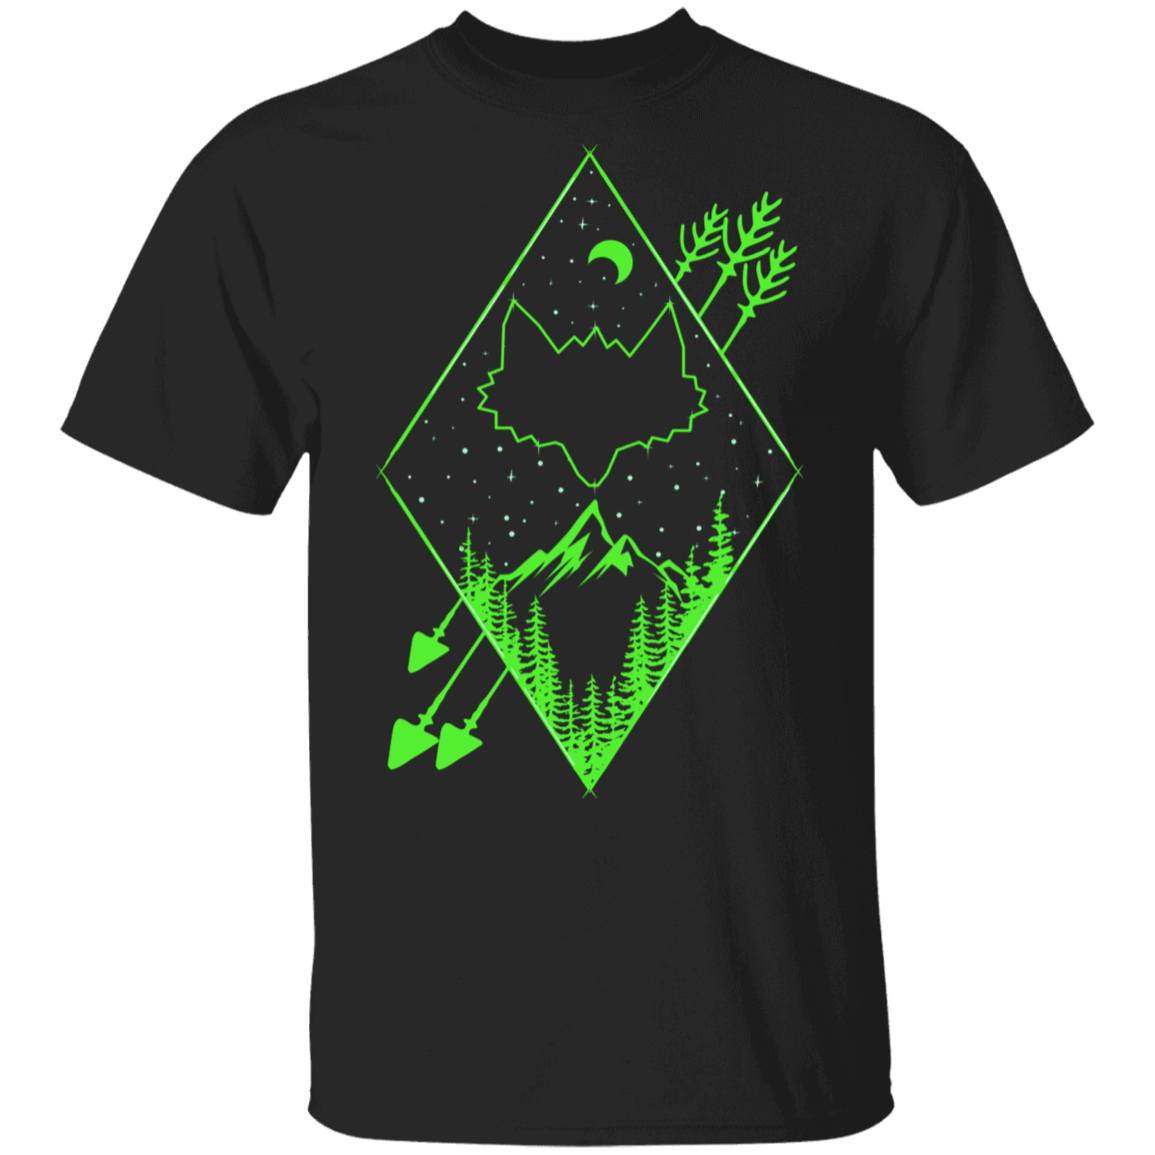 T-Shirts Black / S Diamond Fox Arrows T-Shirt